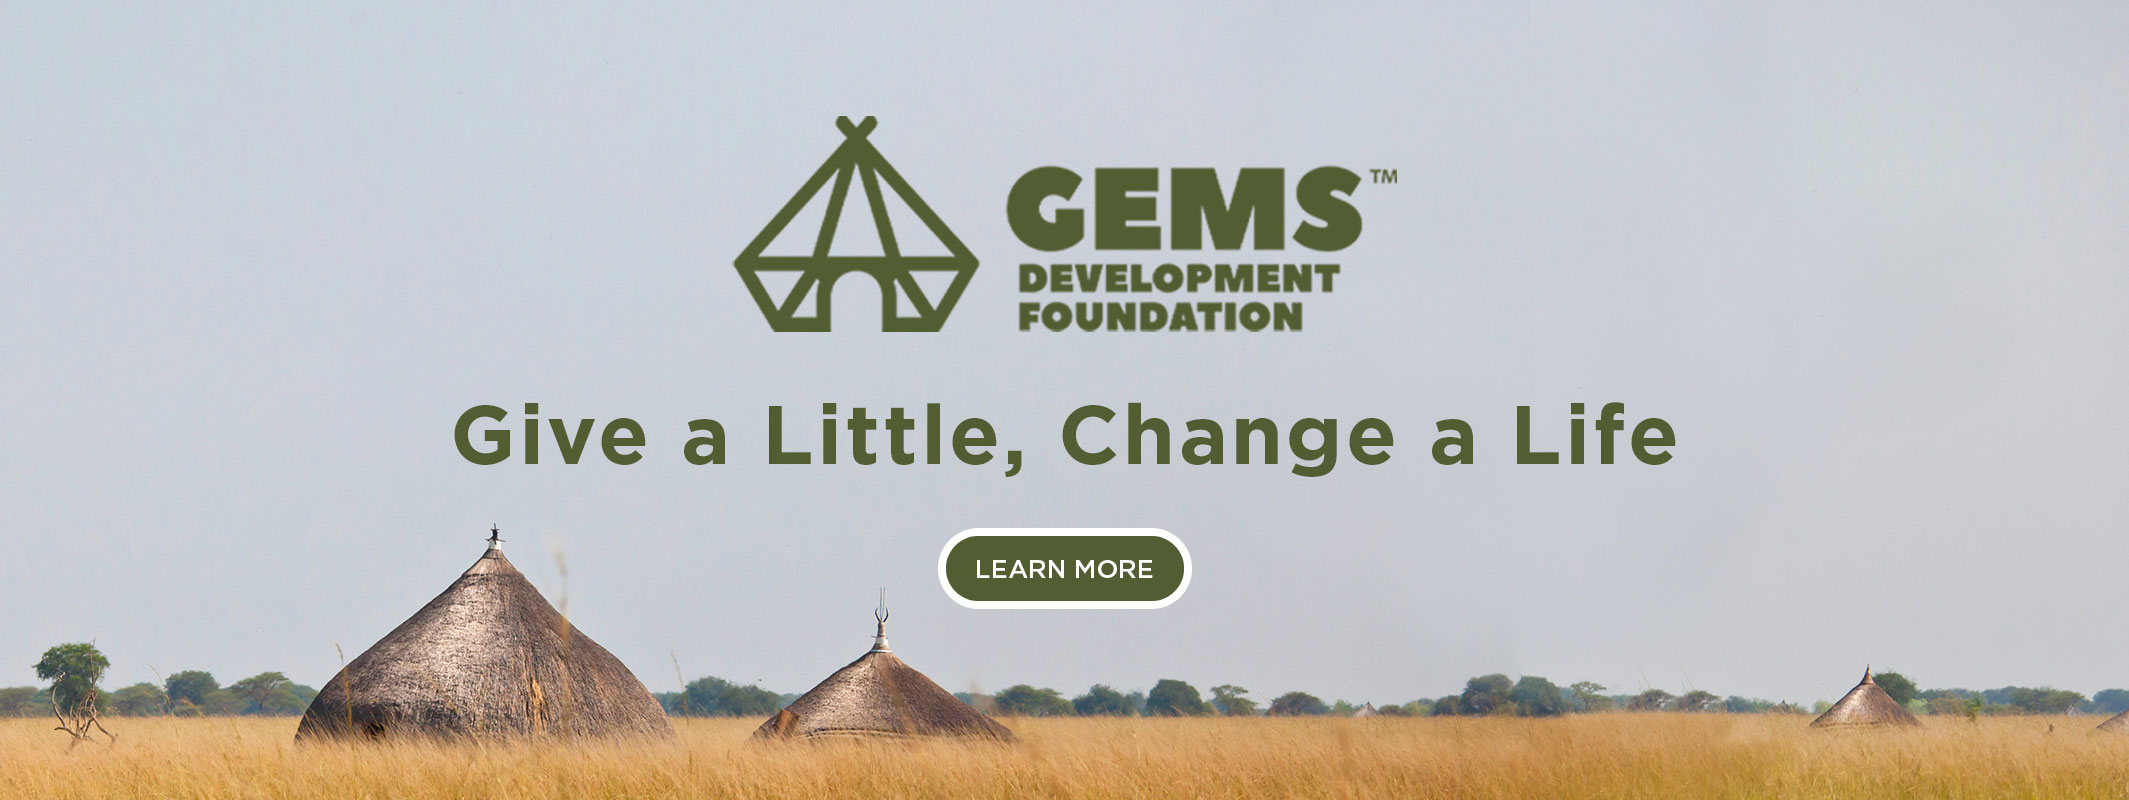 GEMS Development Foundation